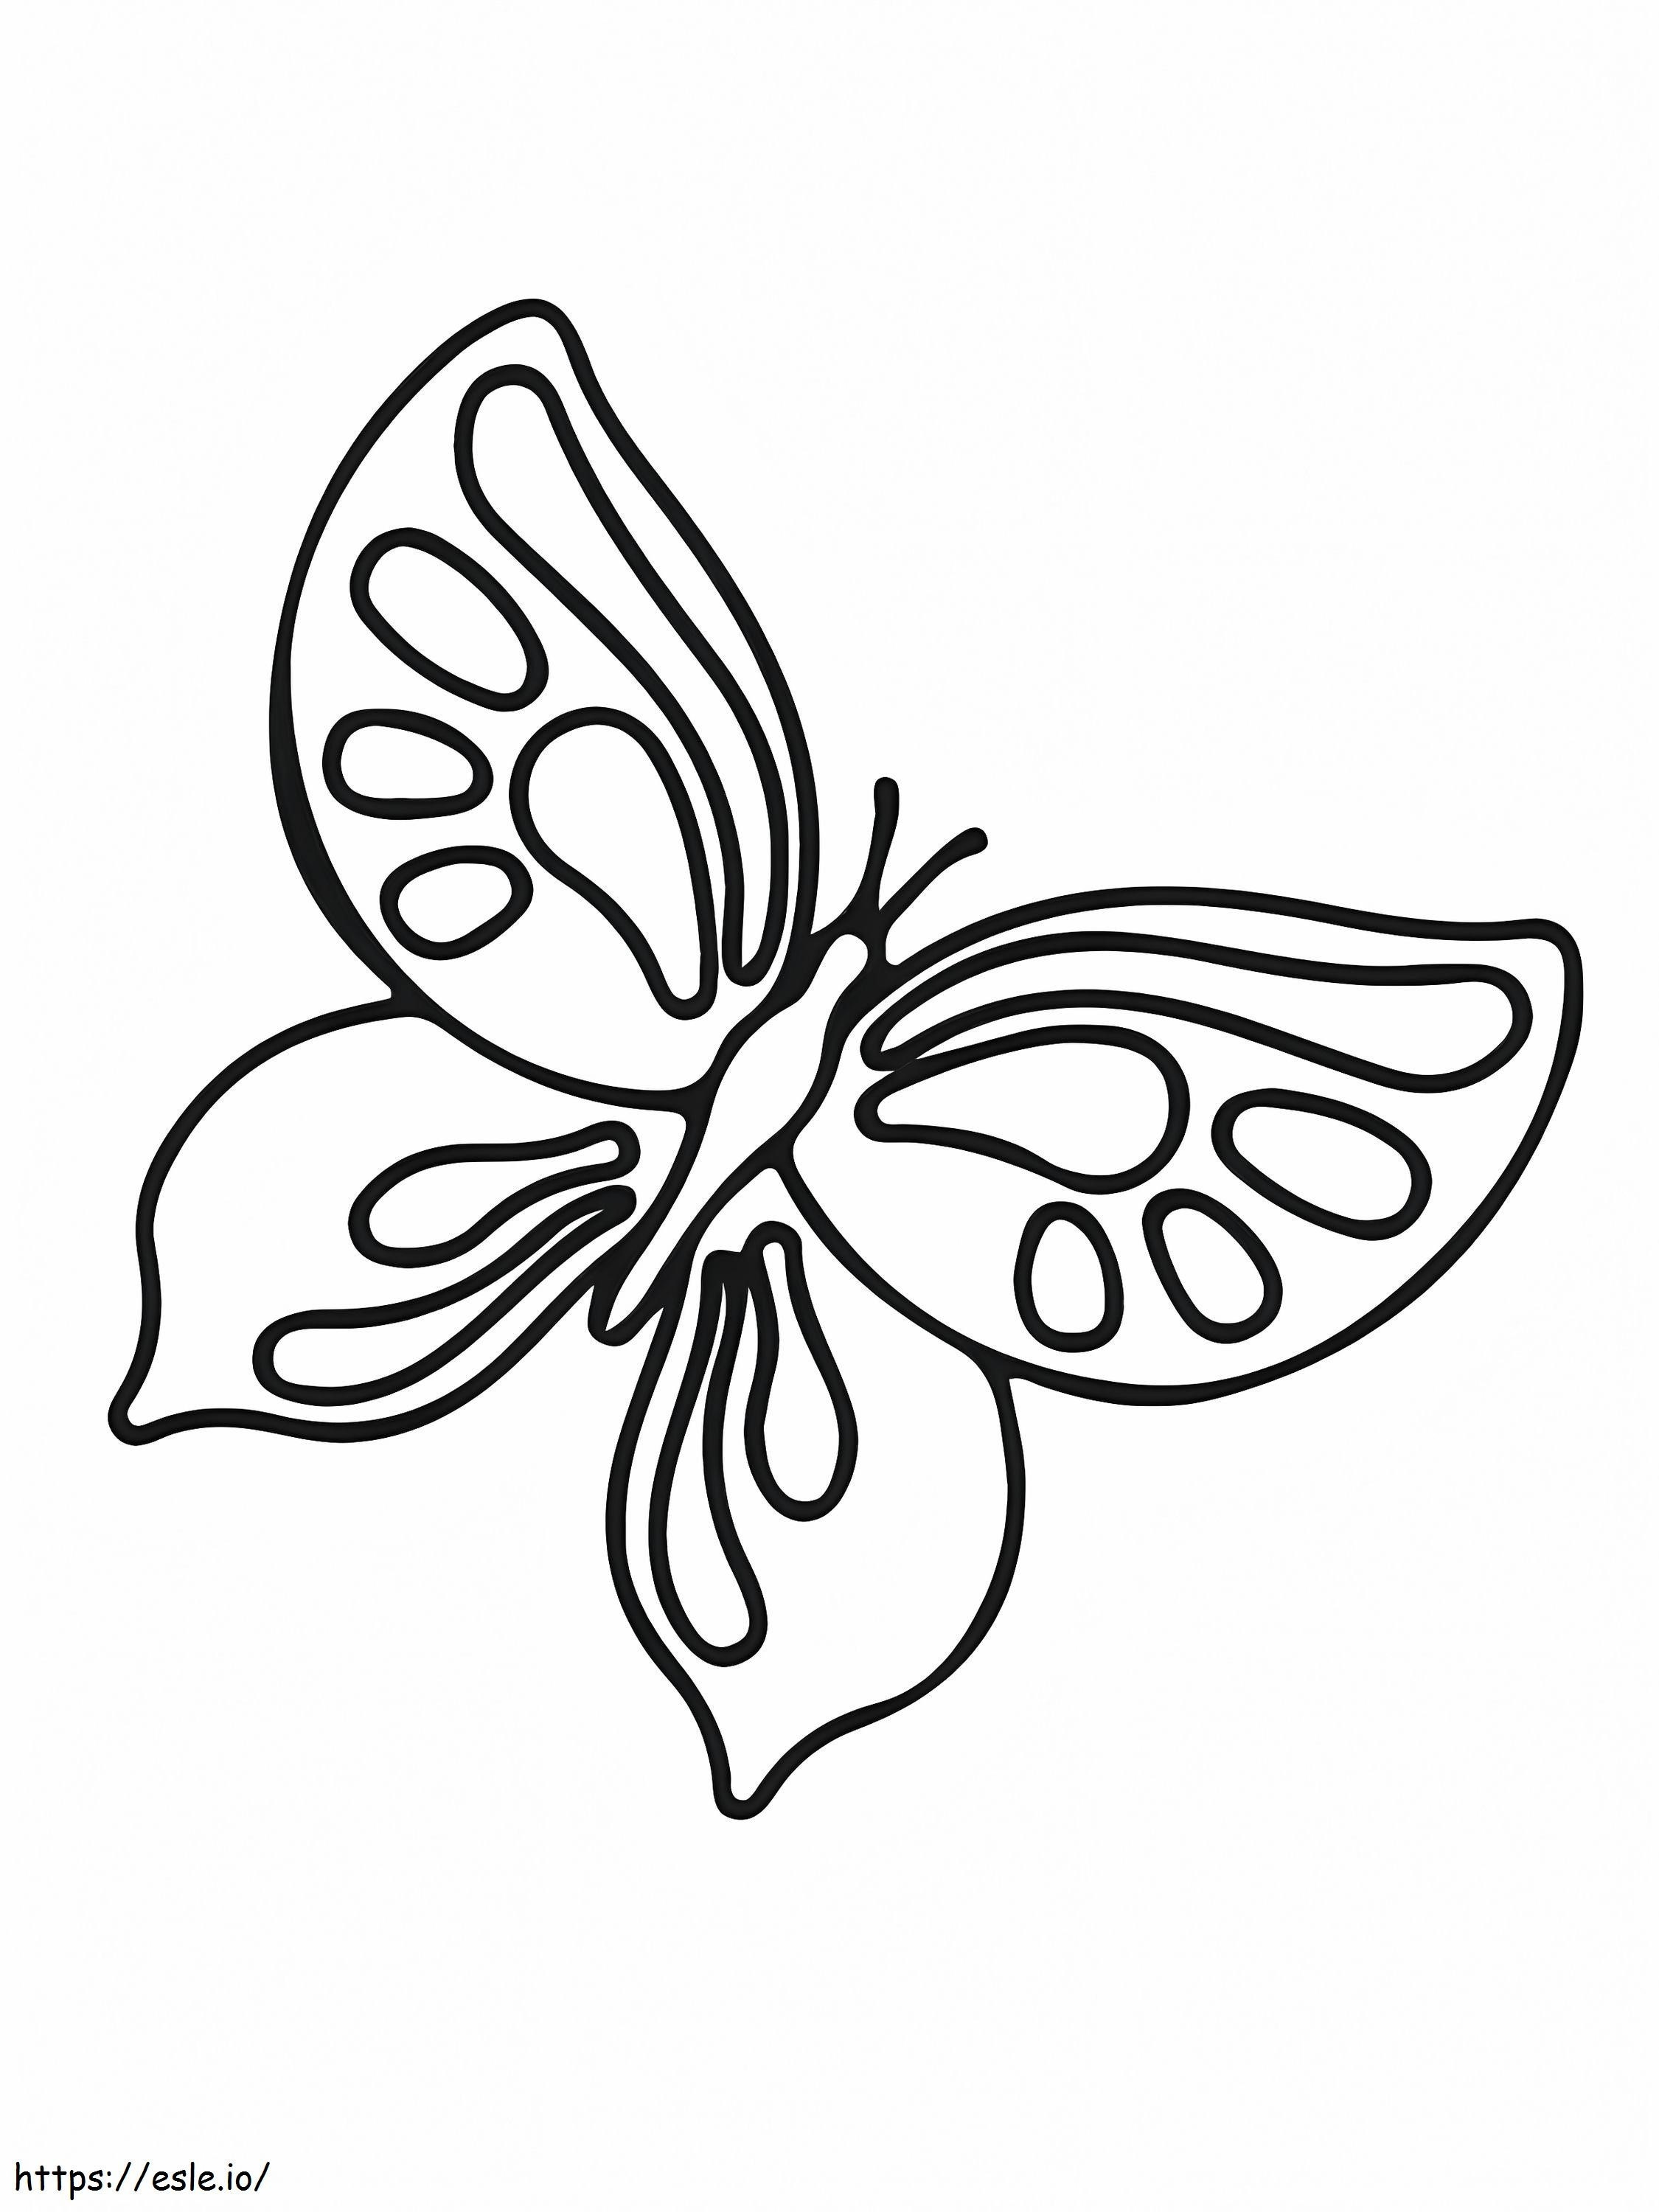 Kupu-kupu Sederhana Tapi Cantik Gambar Mewarnai